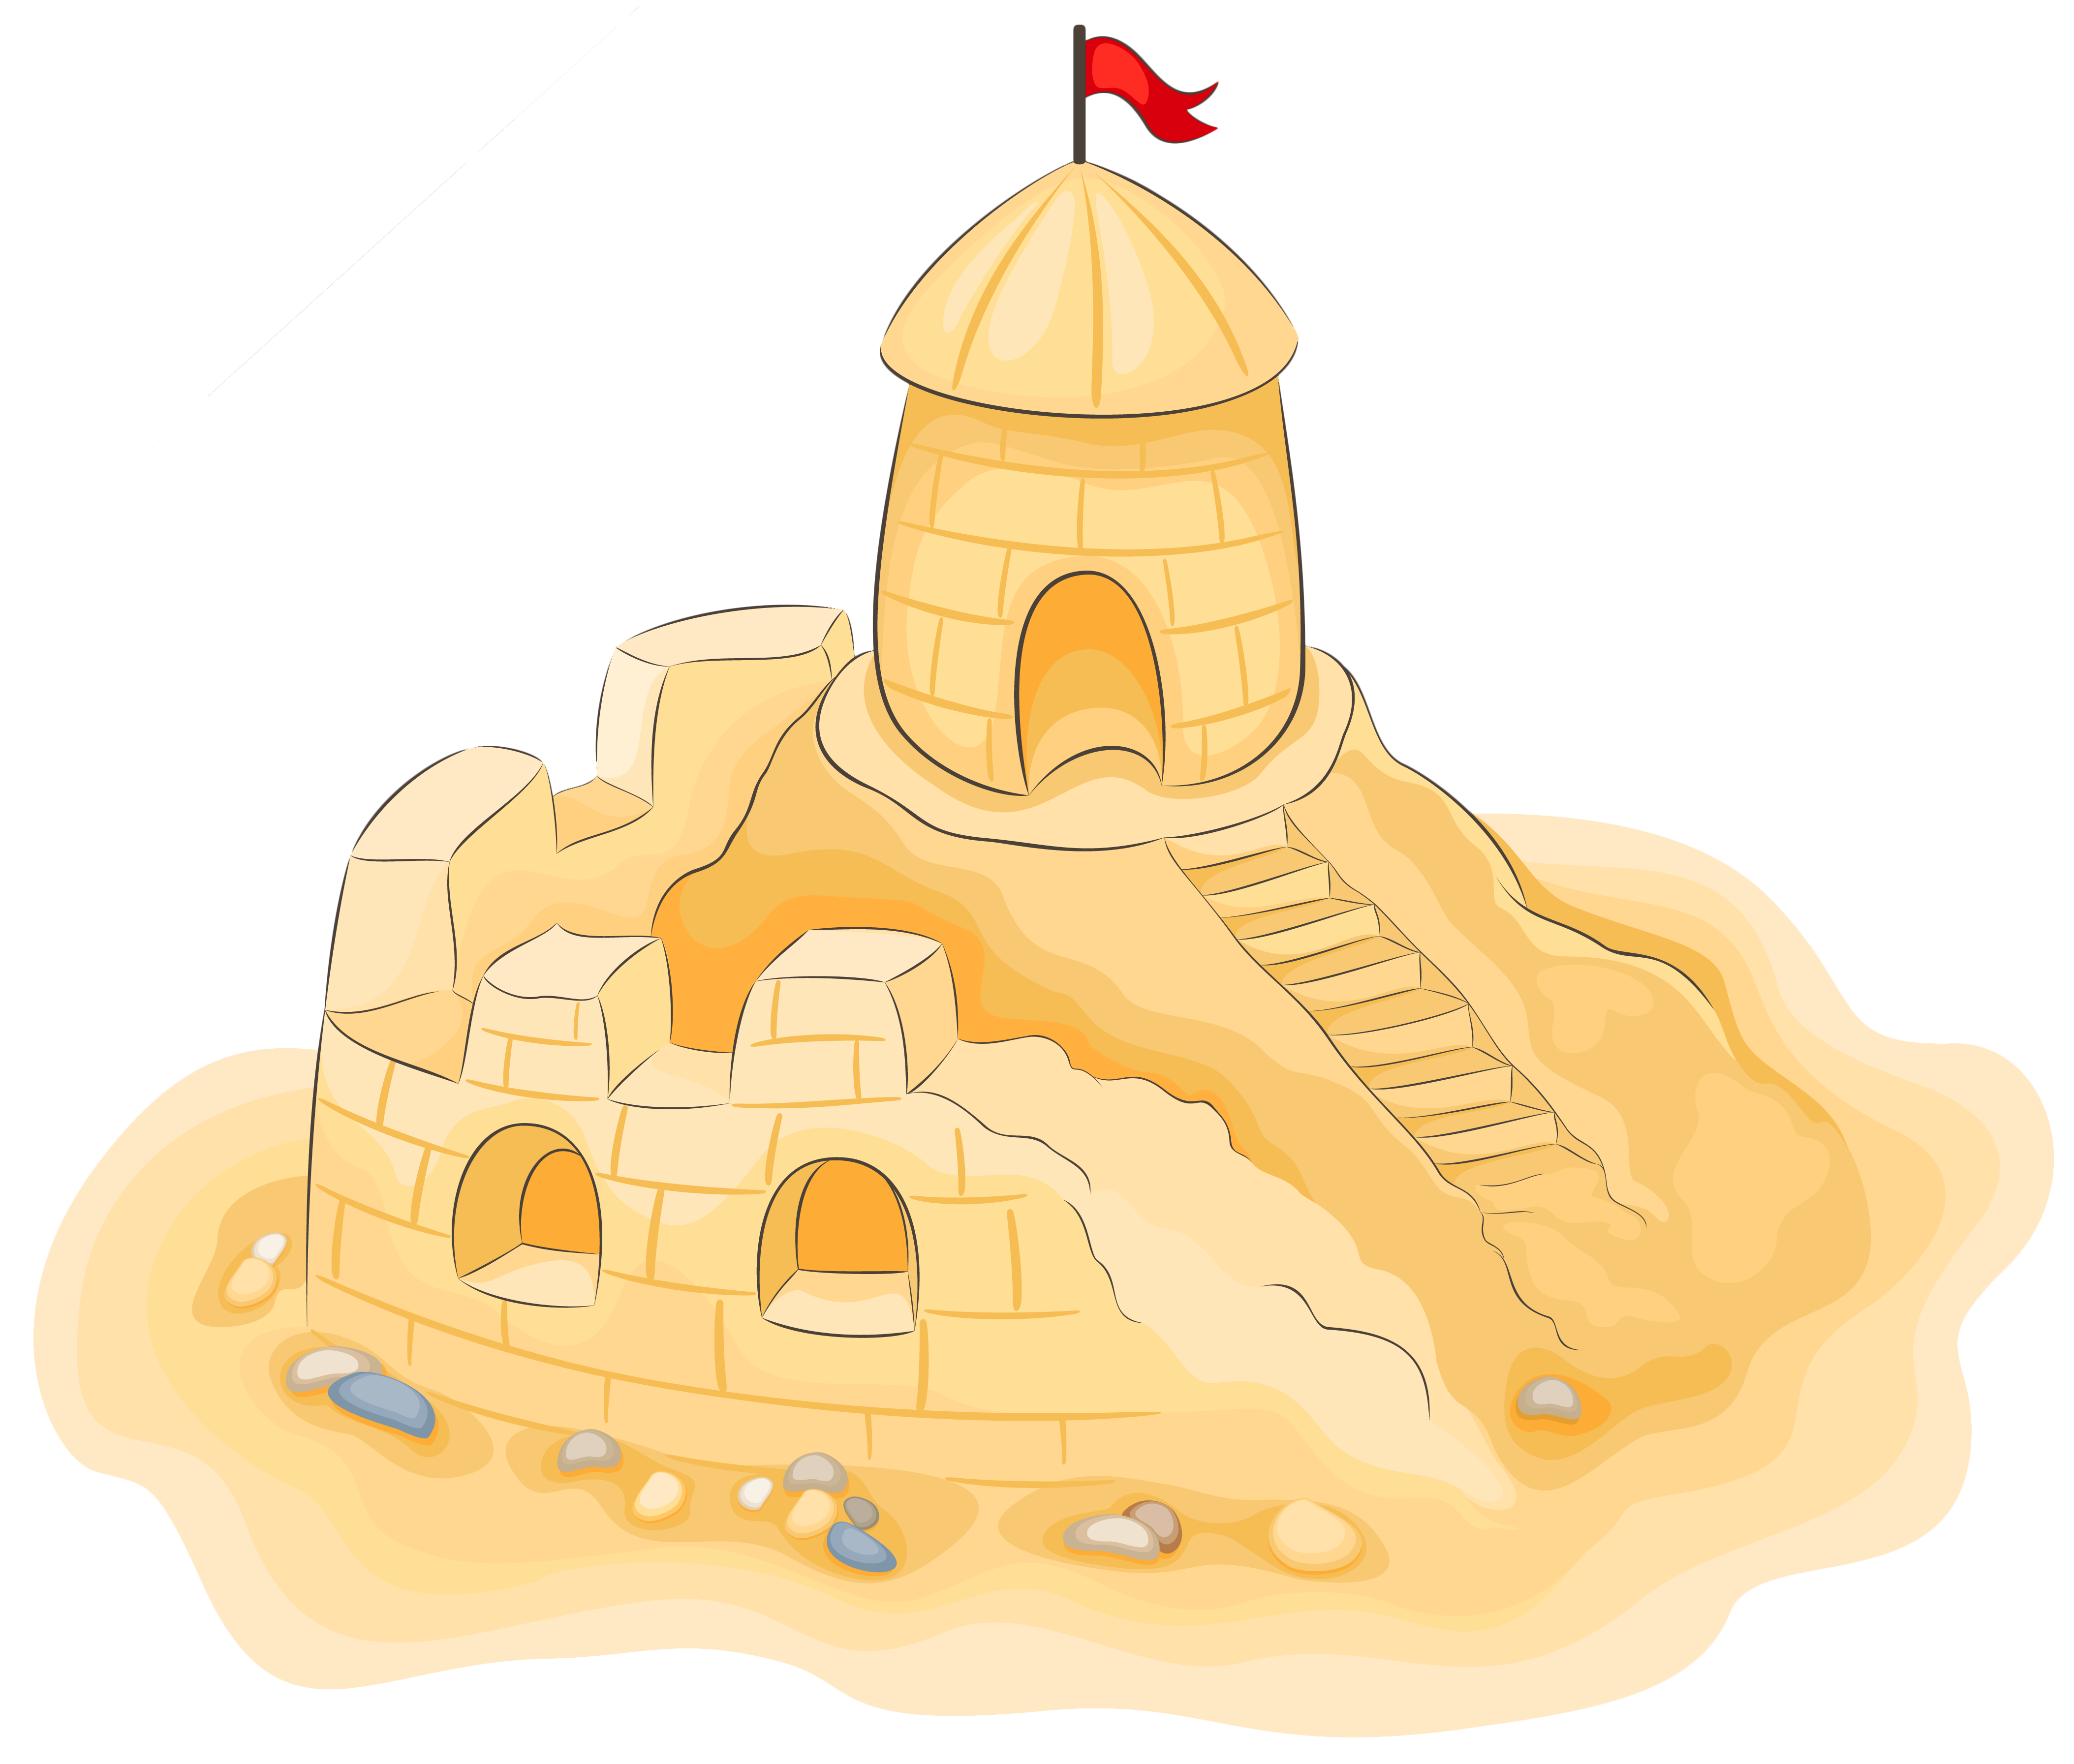 Sandcastle picture. Песочный замок. Замок из песка на прозрачном фоне. Песочный замок на прозрачном фоне. Песочный замок на белом фоне.